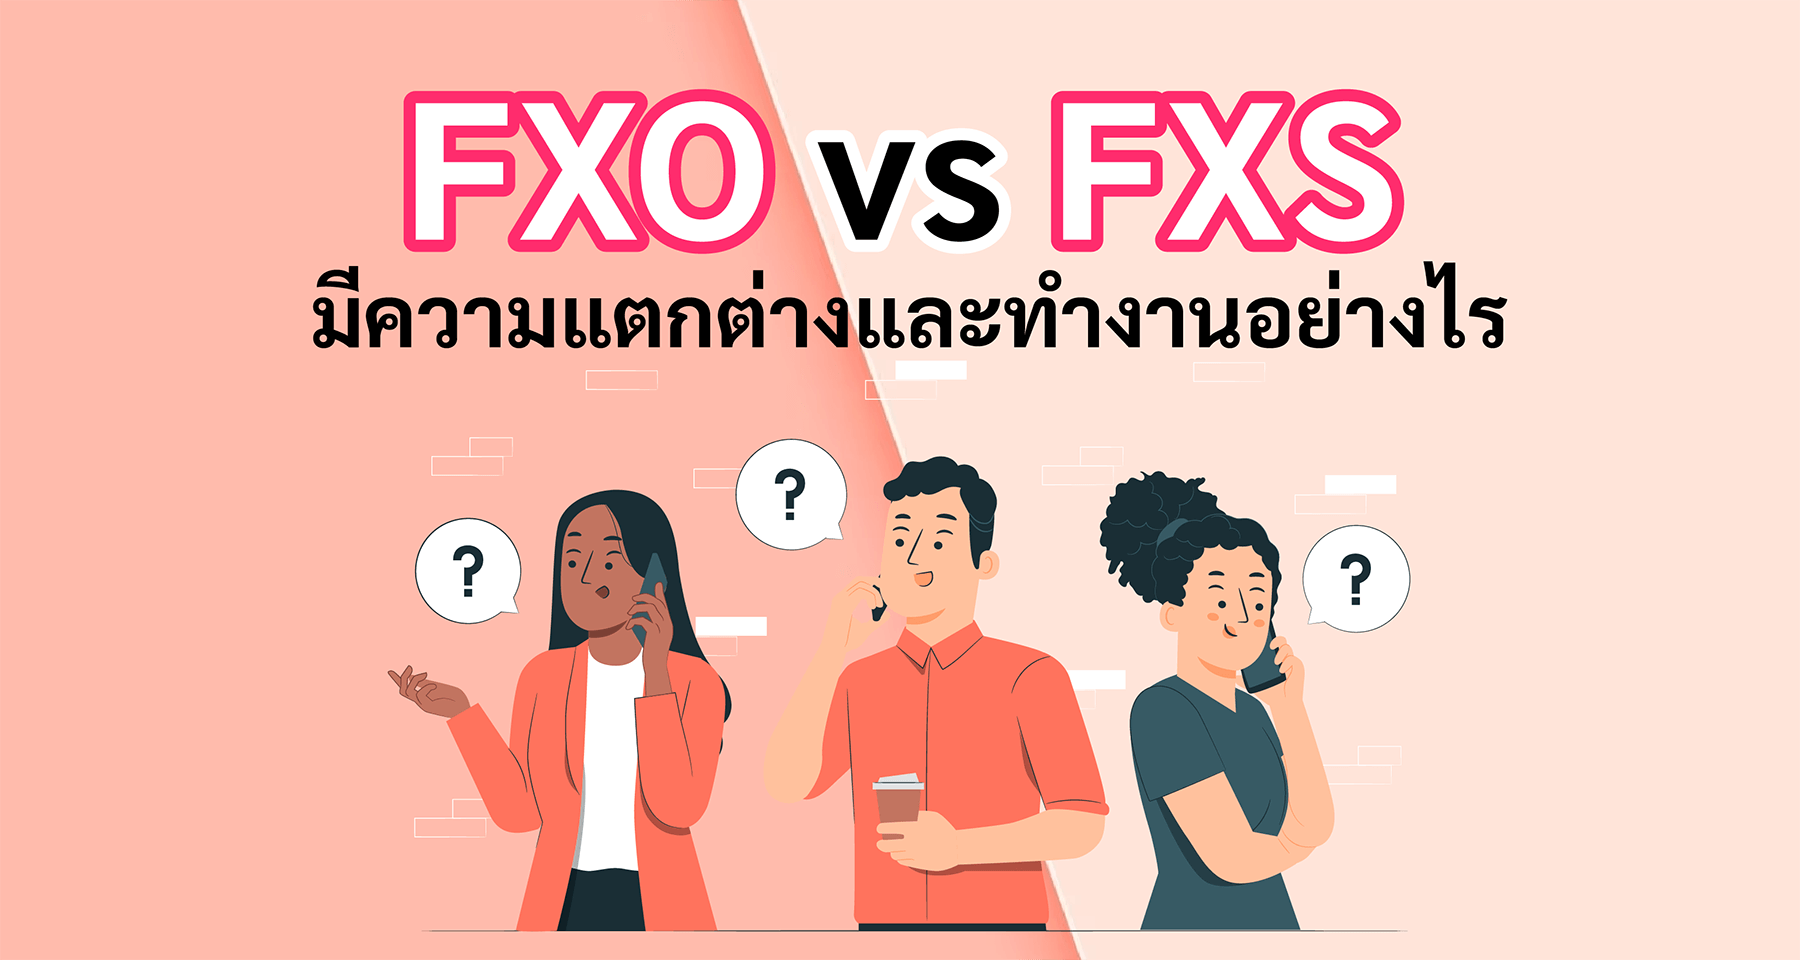 FXO vs FXS มีความแตกต่างและทำงานอย่างไร?